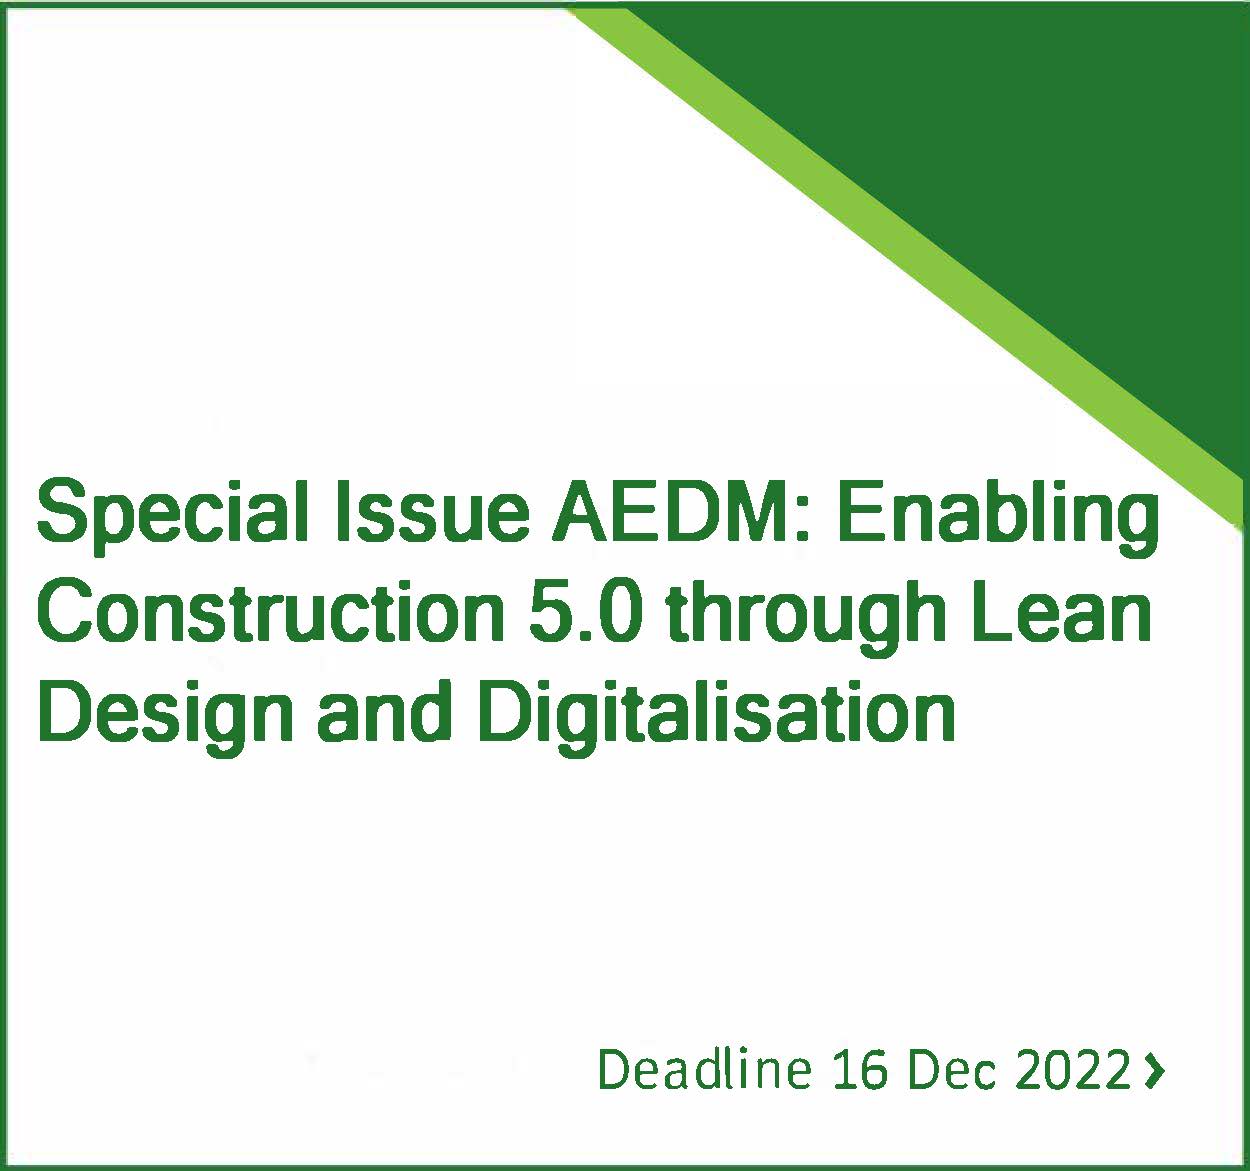 Enabling Construction 5.0 through Lean Design and Digitalisation